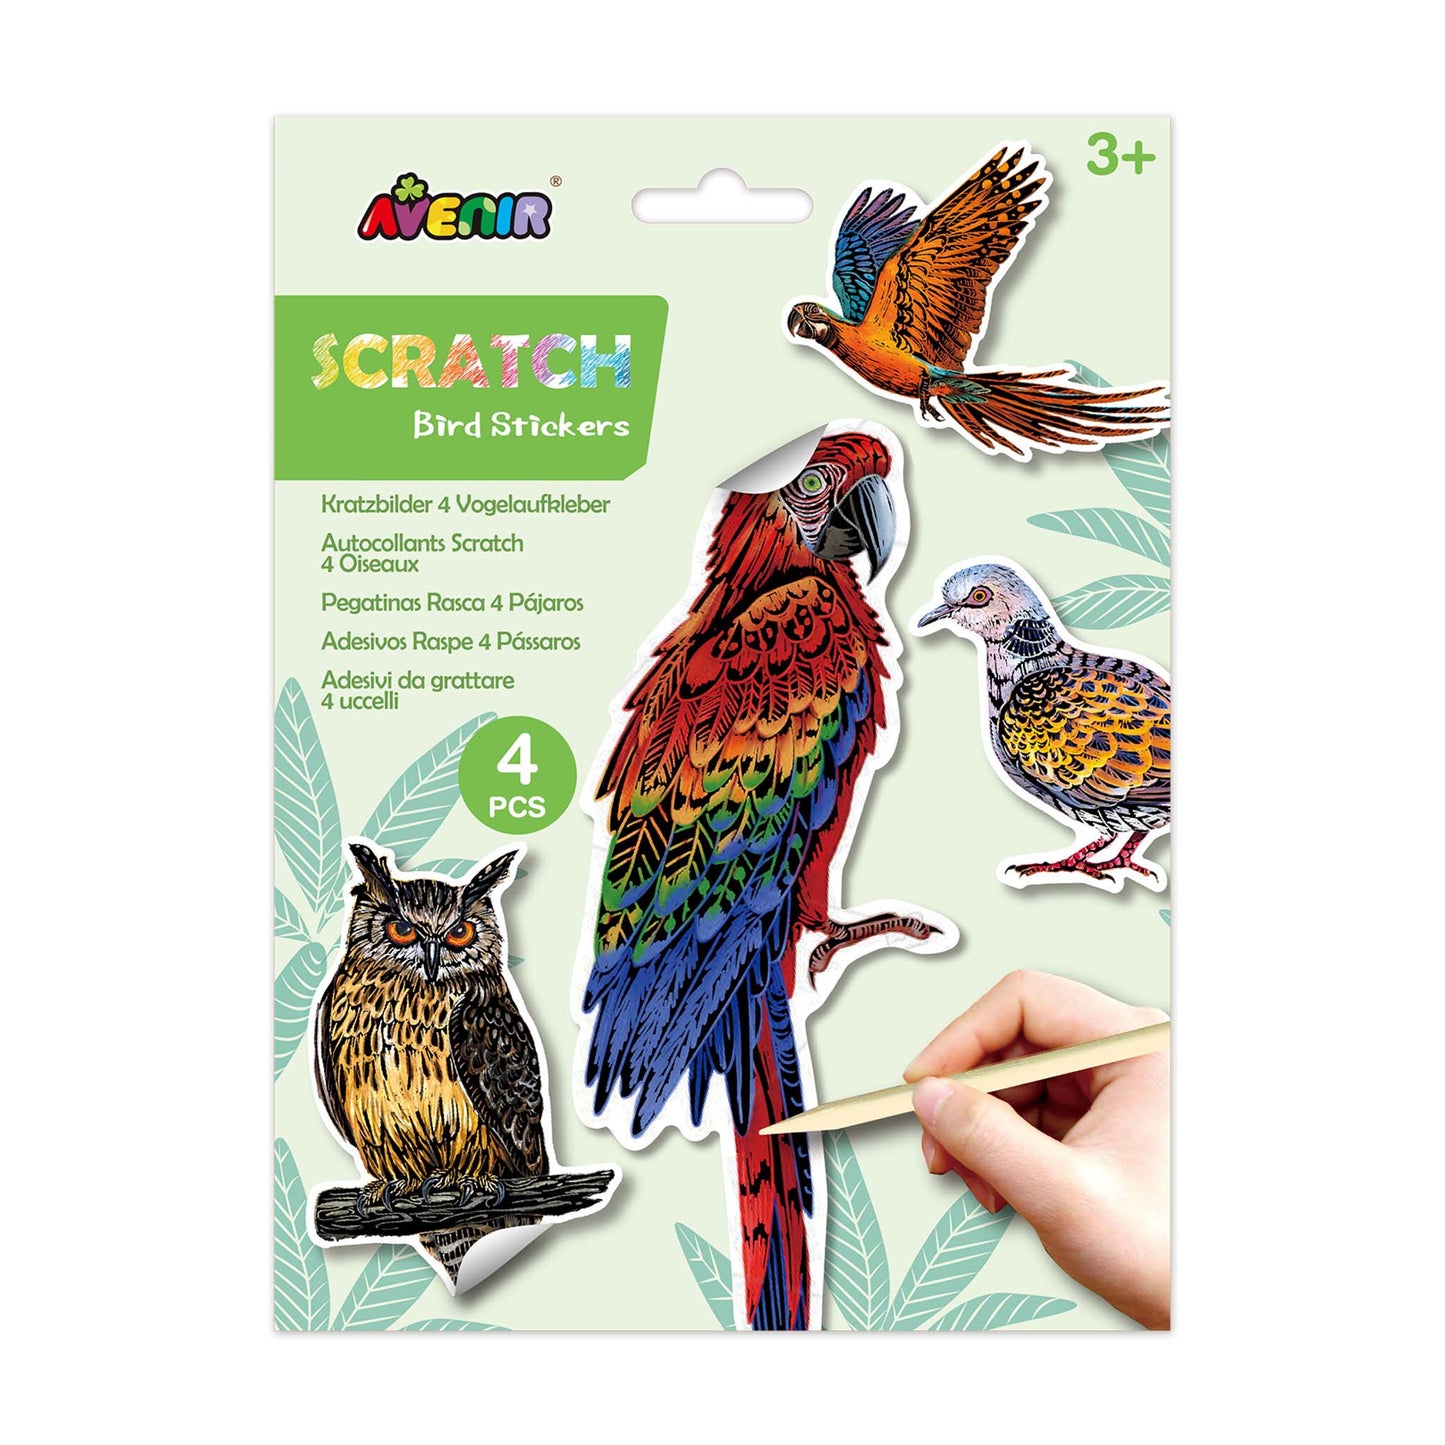 Scratch Bird Stickers